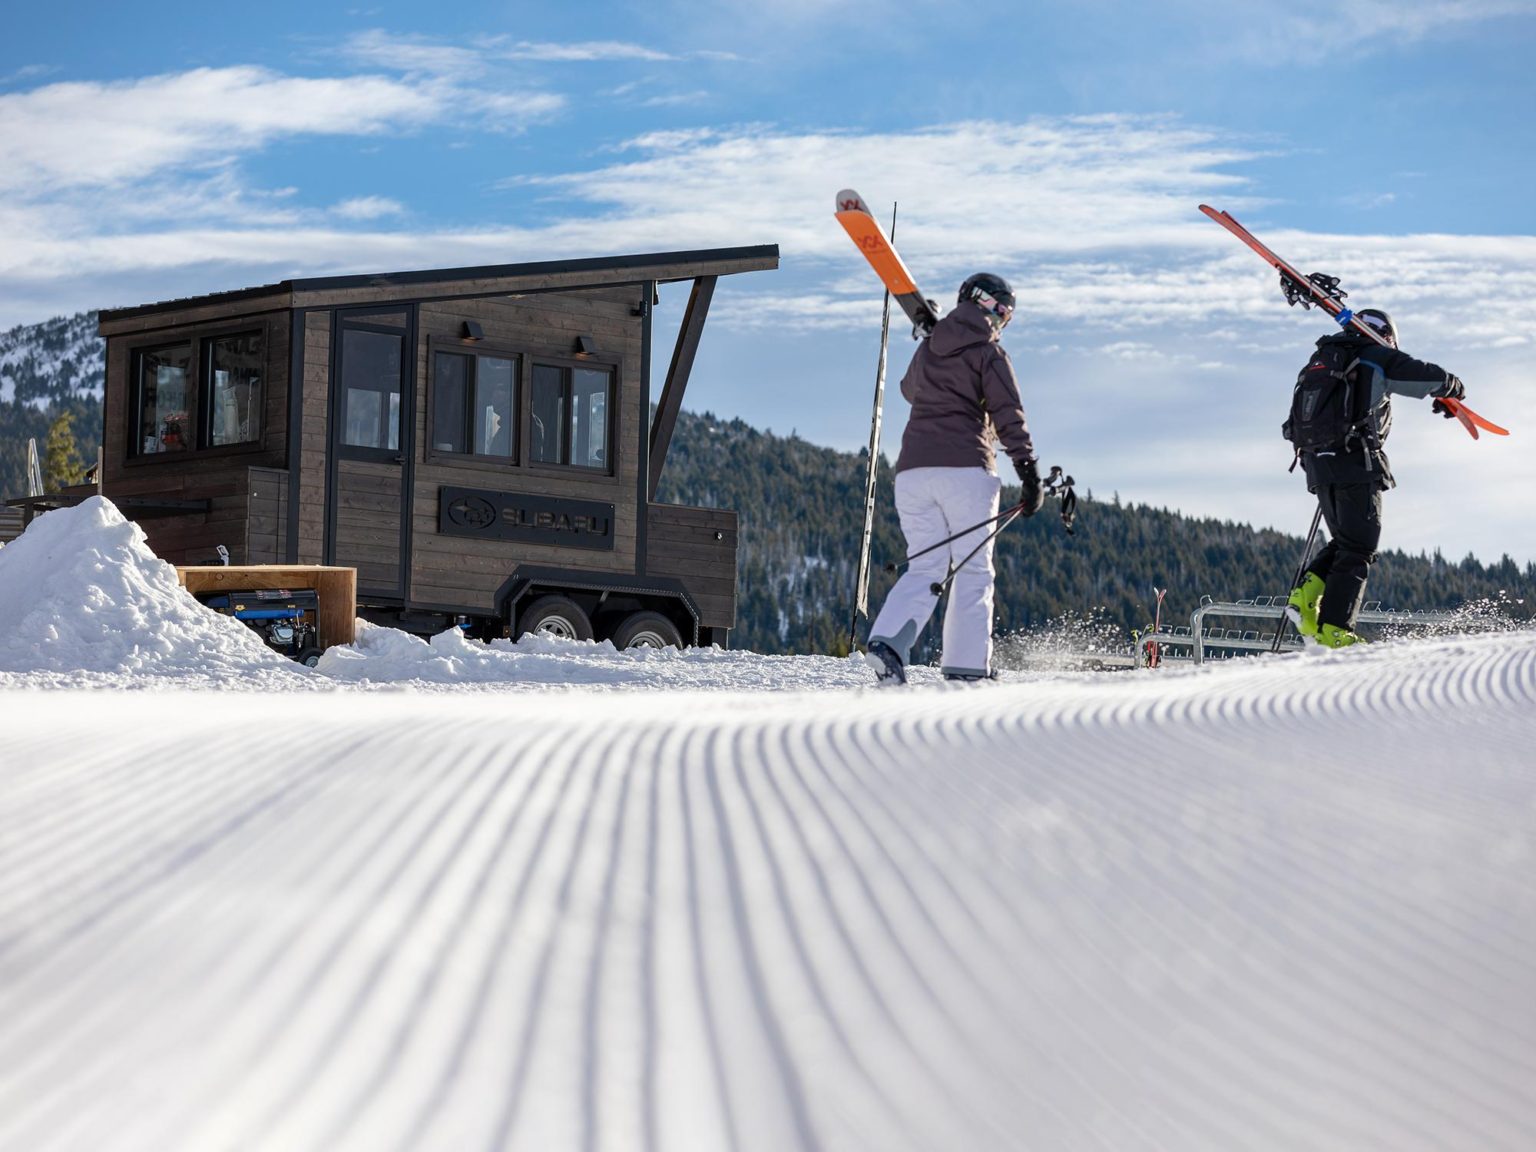 Subie Shacks dot the landscape at ski resorts nationwide.